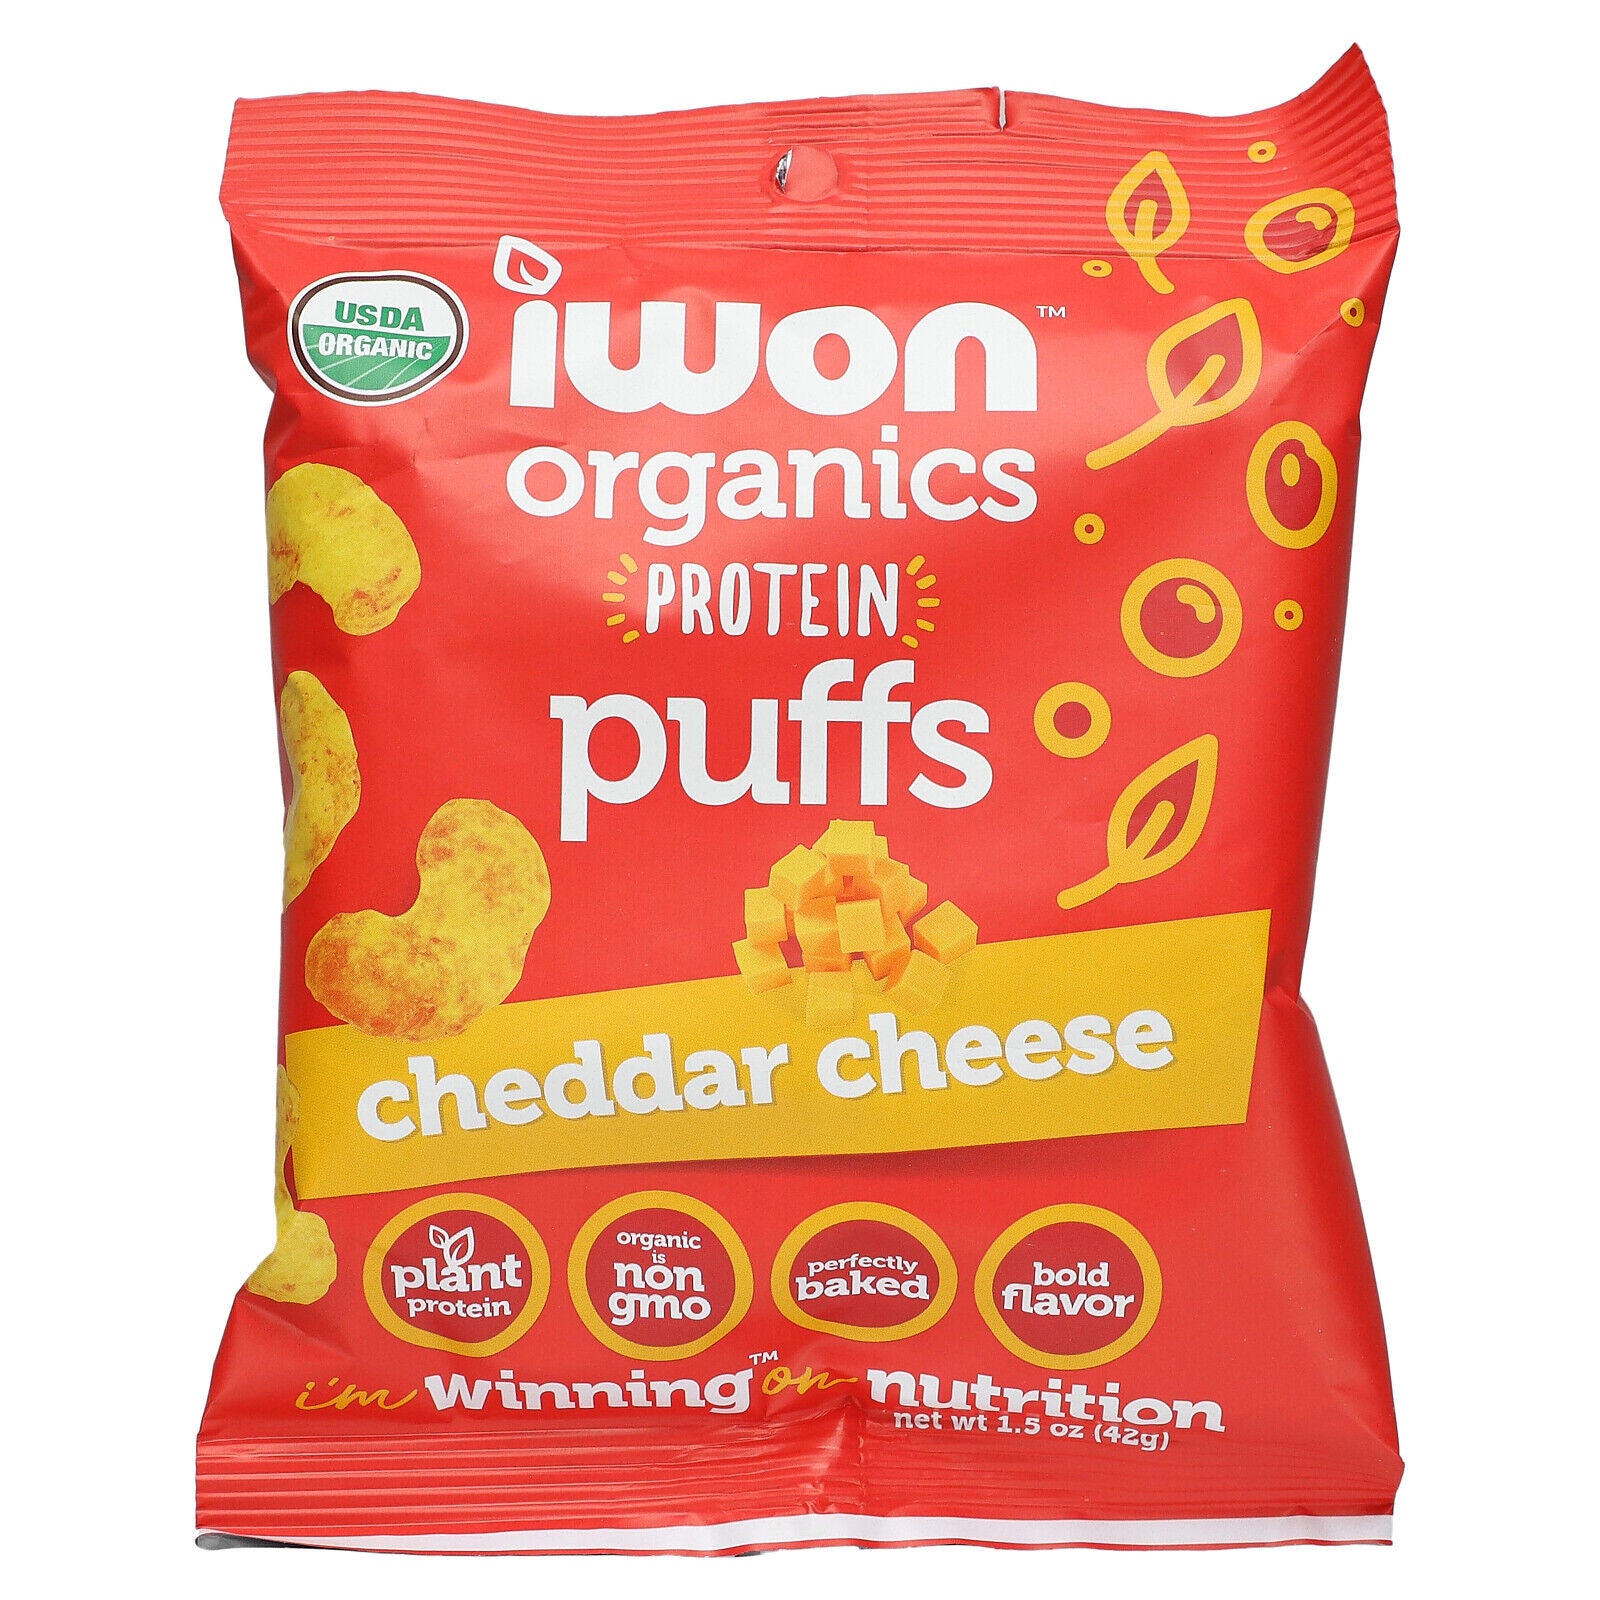 IWON Organics Protein Puffs and Stix (1 bag) Cheddar Cheese Puffs IWON Organics